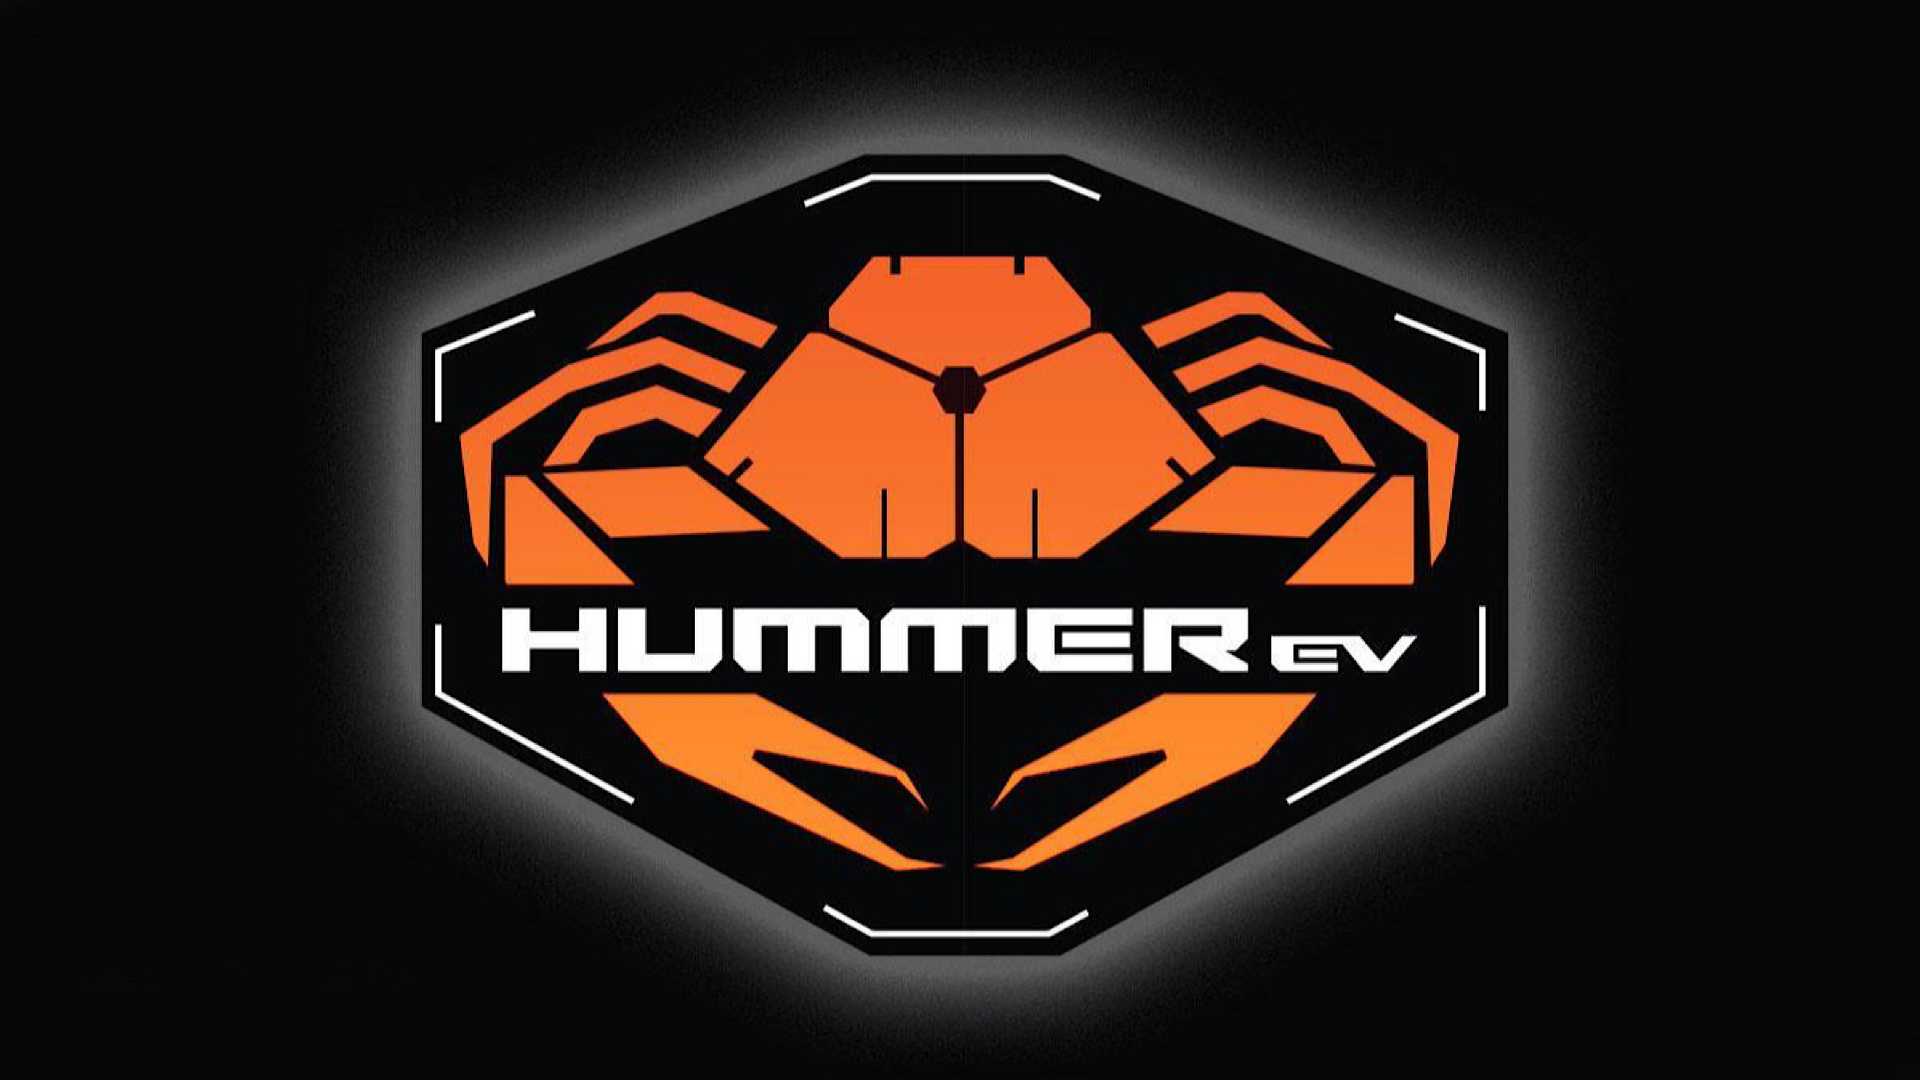 Gmc Teases Crab Mode For Hummer Ev Shows New Logo